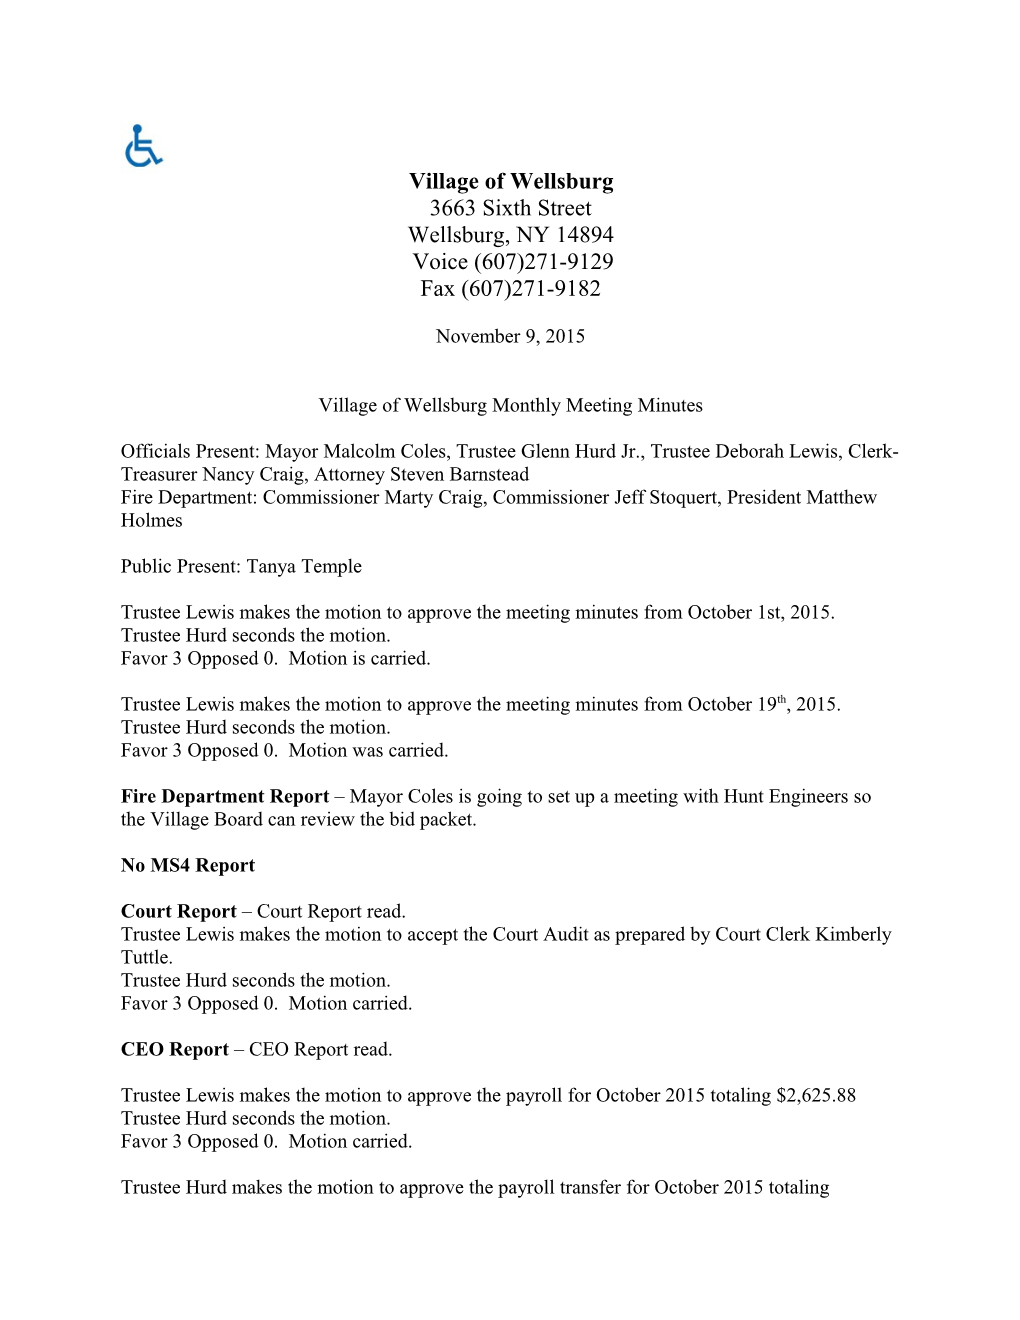 Village of Wellsburg Monthly Meeting Minutes